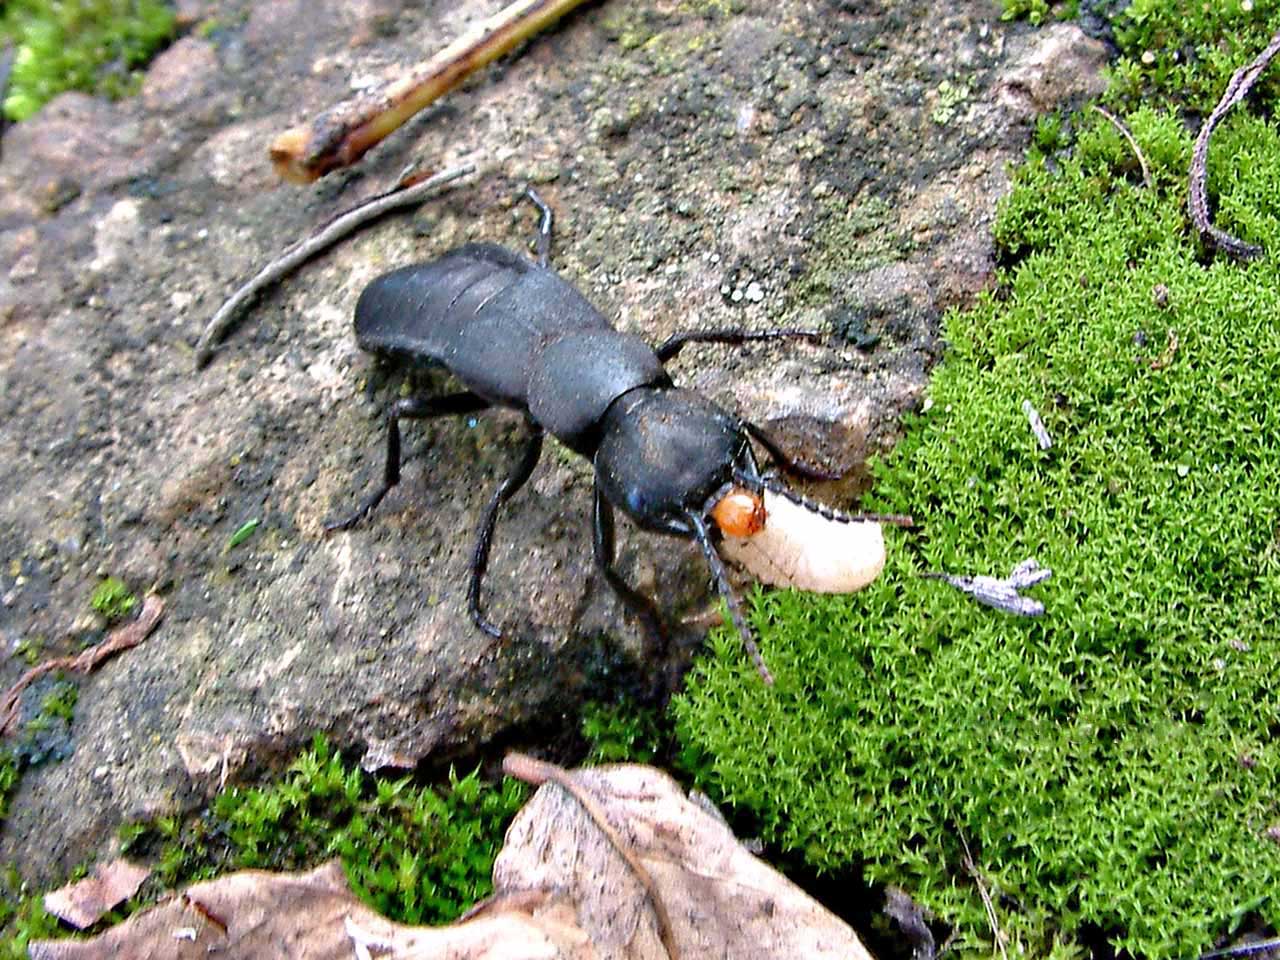 Devil’s coachhorse beetle with vine weevil larva